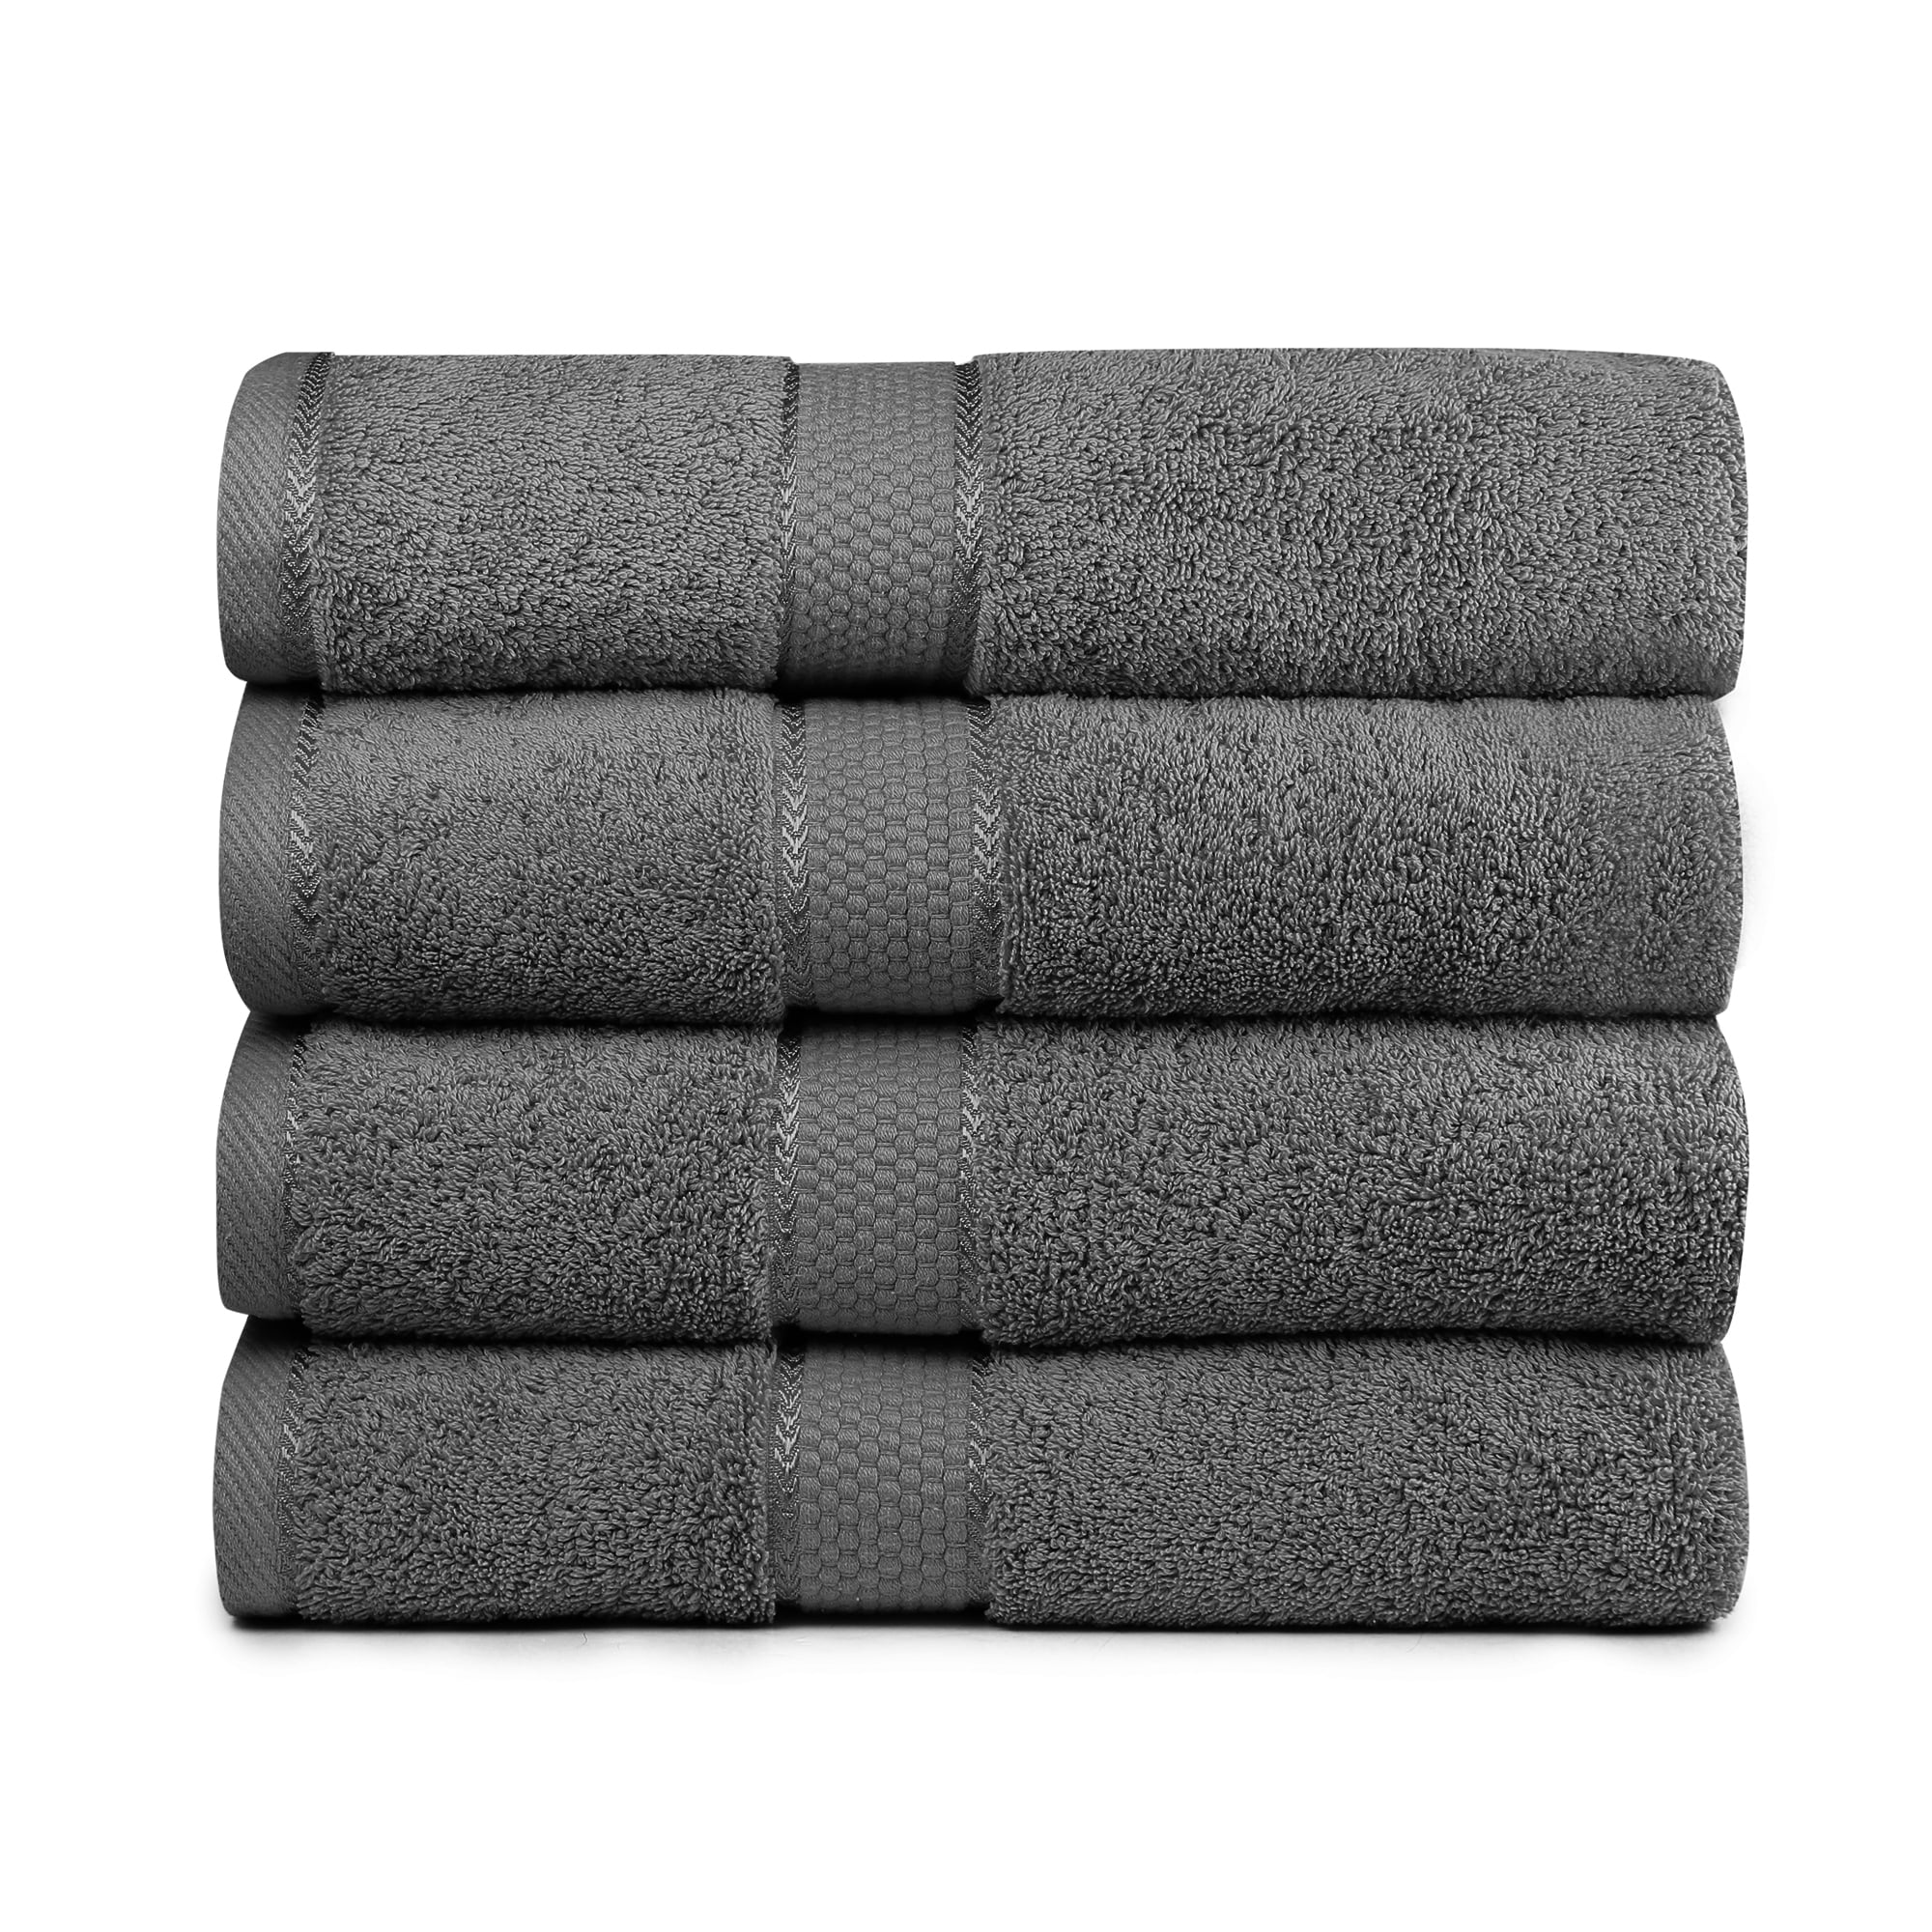 Bisgal 4-Piece Luxury Bath Towels Set ? Super Soft & Durable 